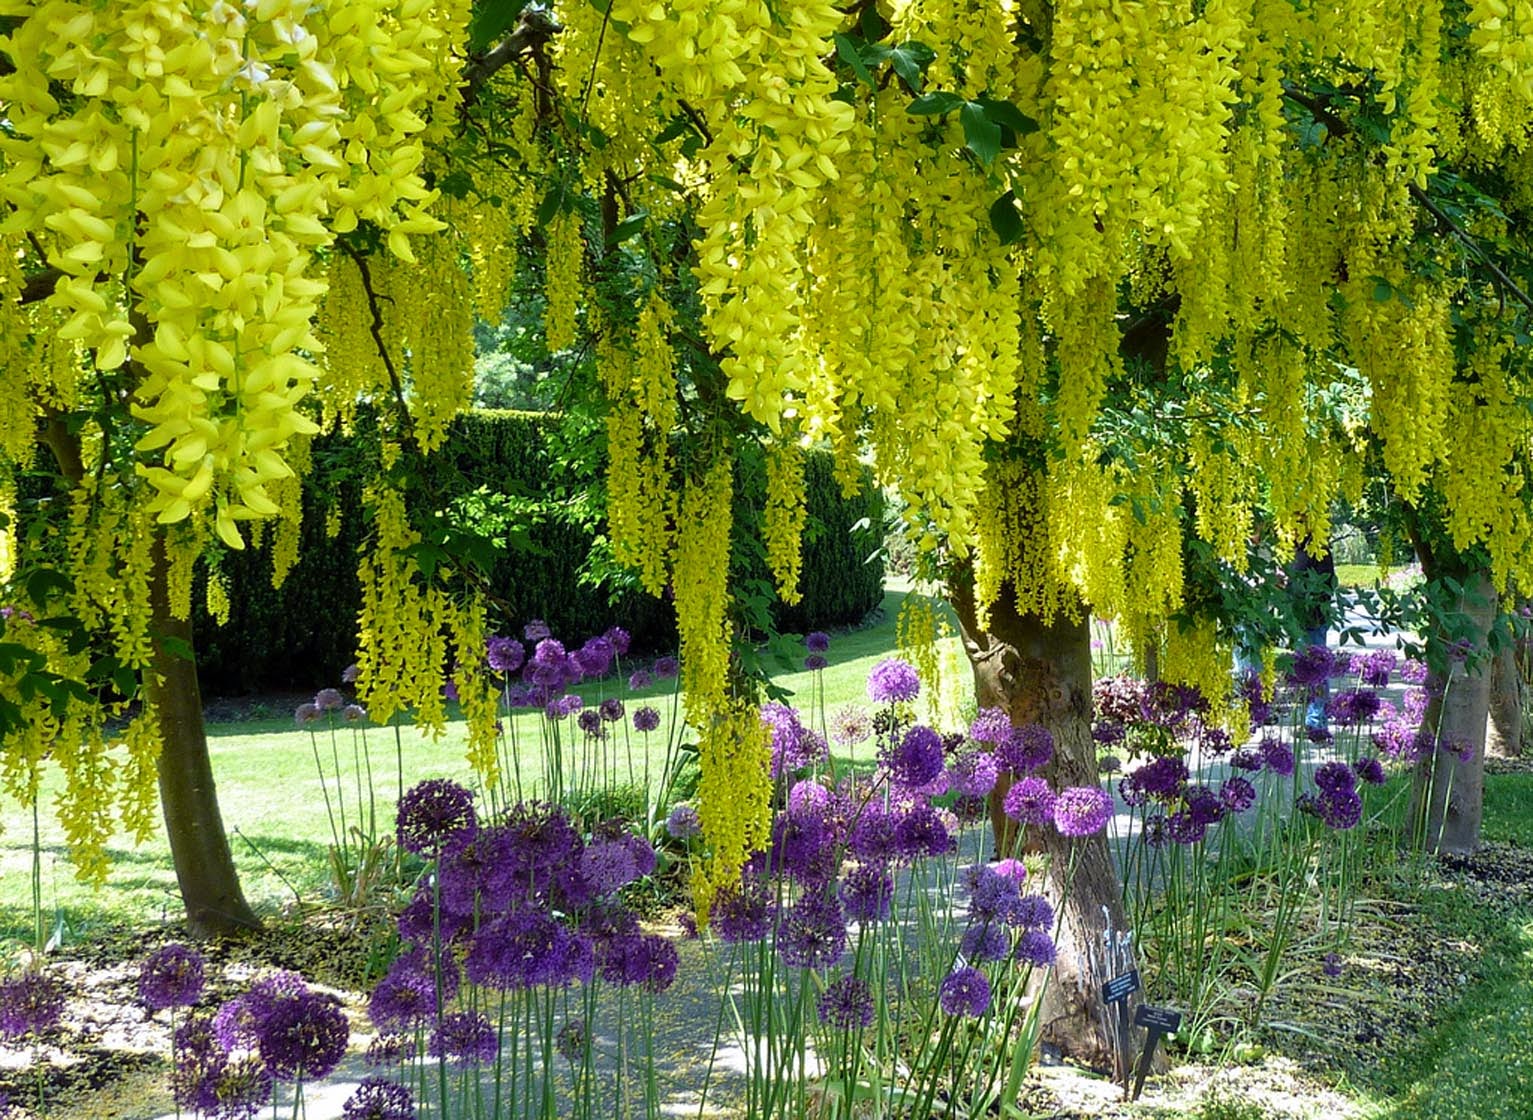 Laburnum (golden chain) trees and purple alliums in bloom at